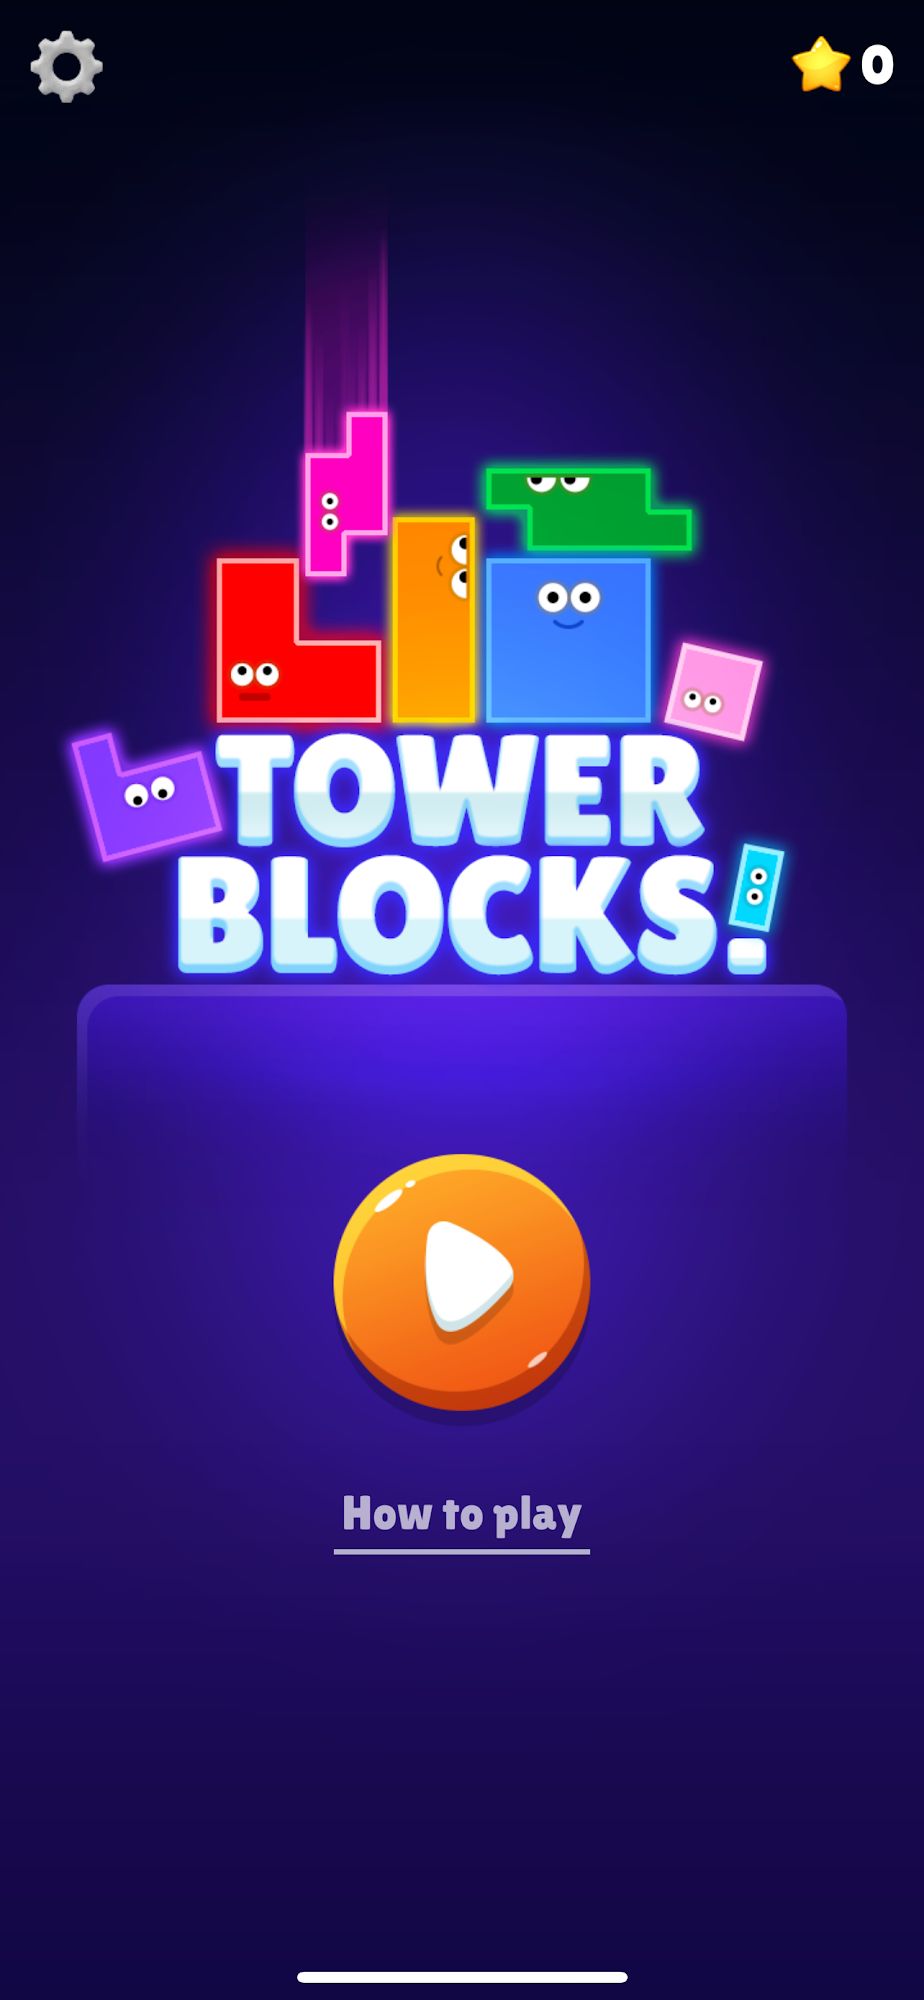 Tower Blocks!